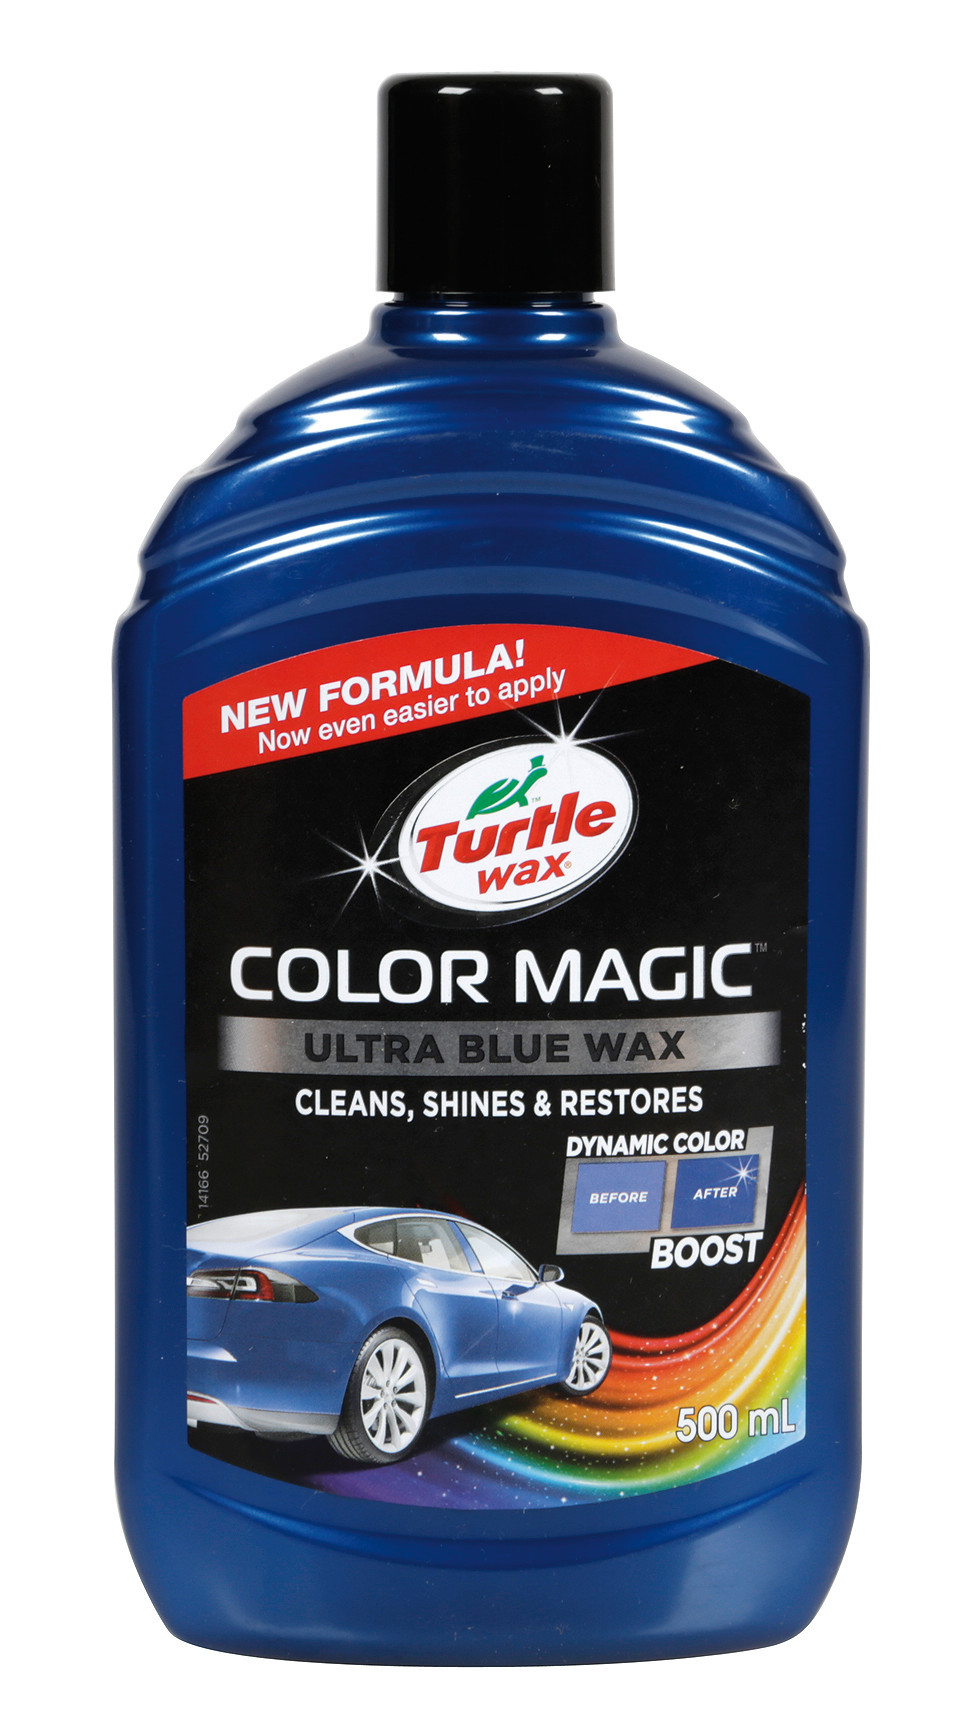 Turtle wax Color Magic car polishing paste 500 ml - Blue thumb